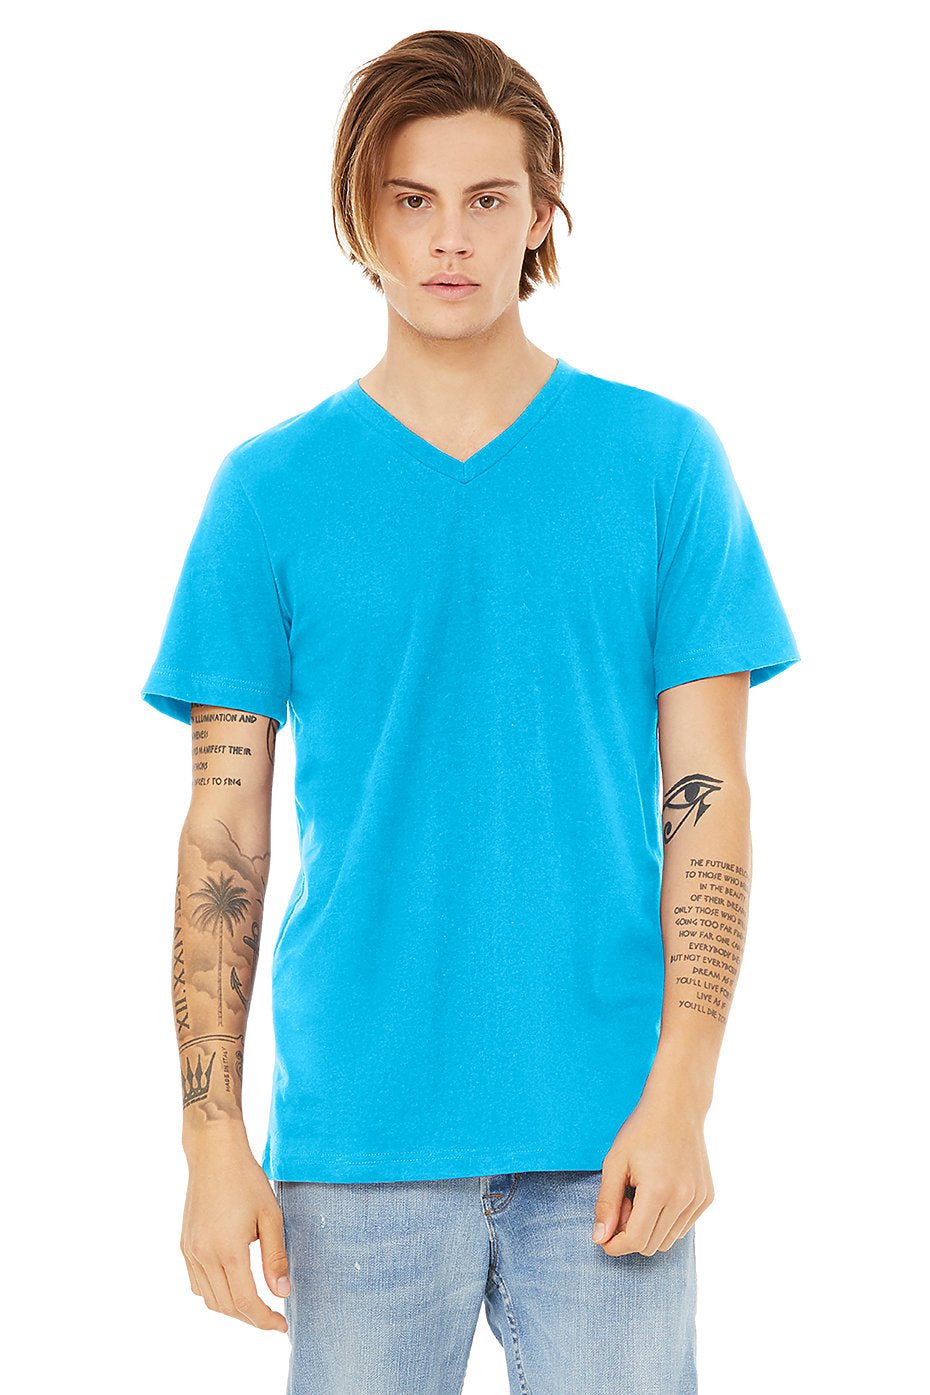 Versatile Unisex T-Shirts! - Shop Now! – Twisted Swag, Inc.